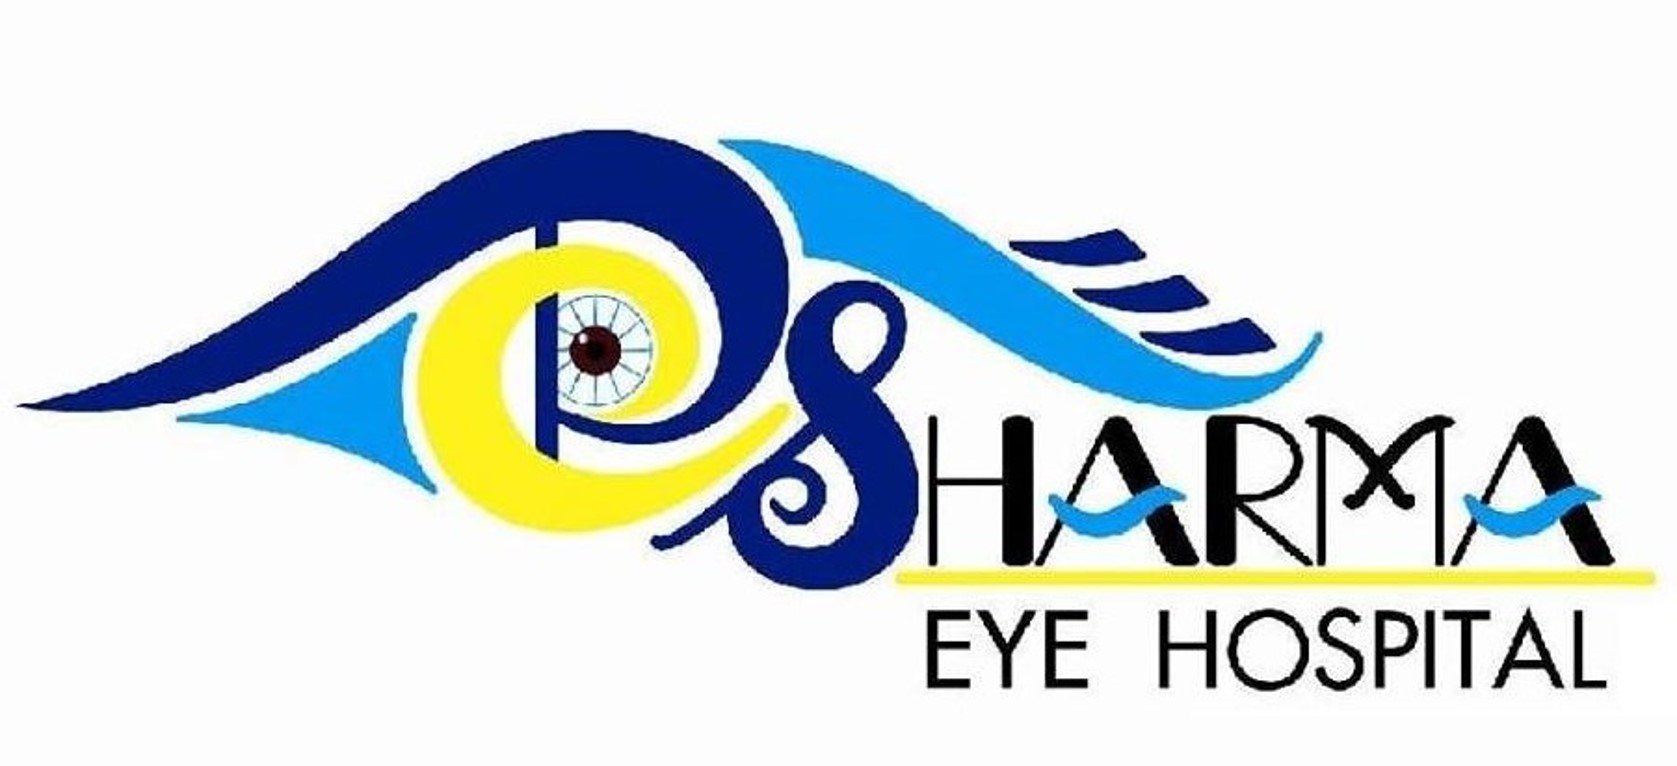 PC sharma eye hospital